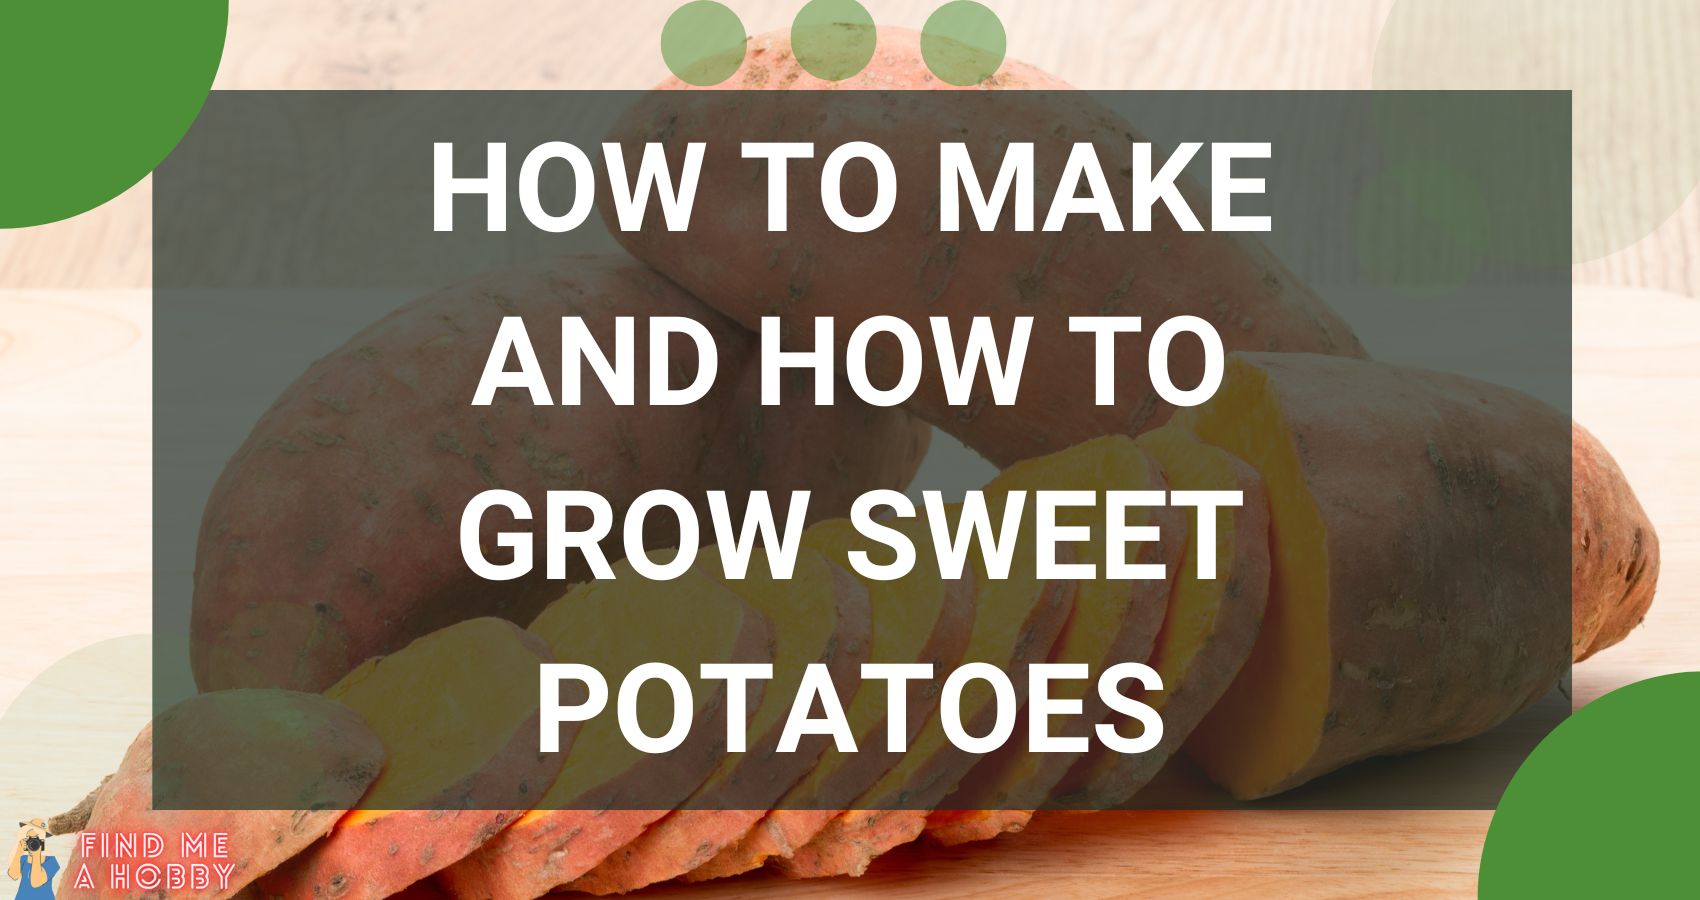 How To Make and How To Grow Sweet Potatoes